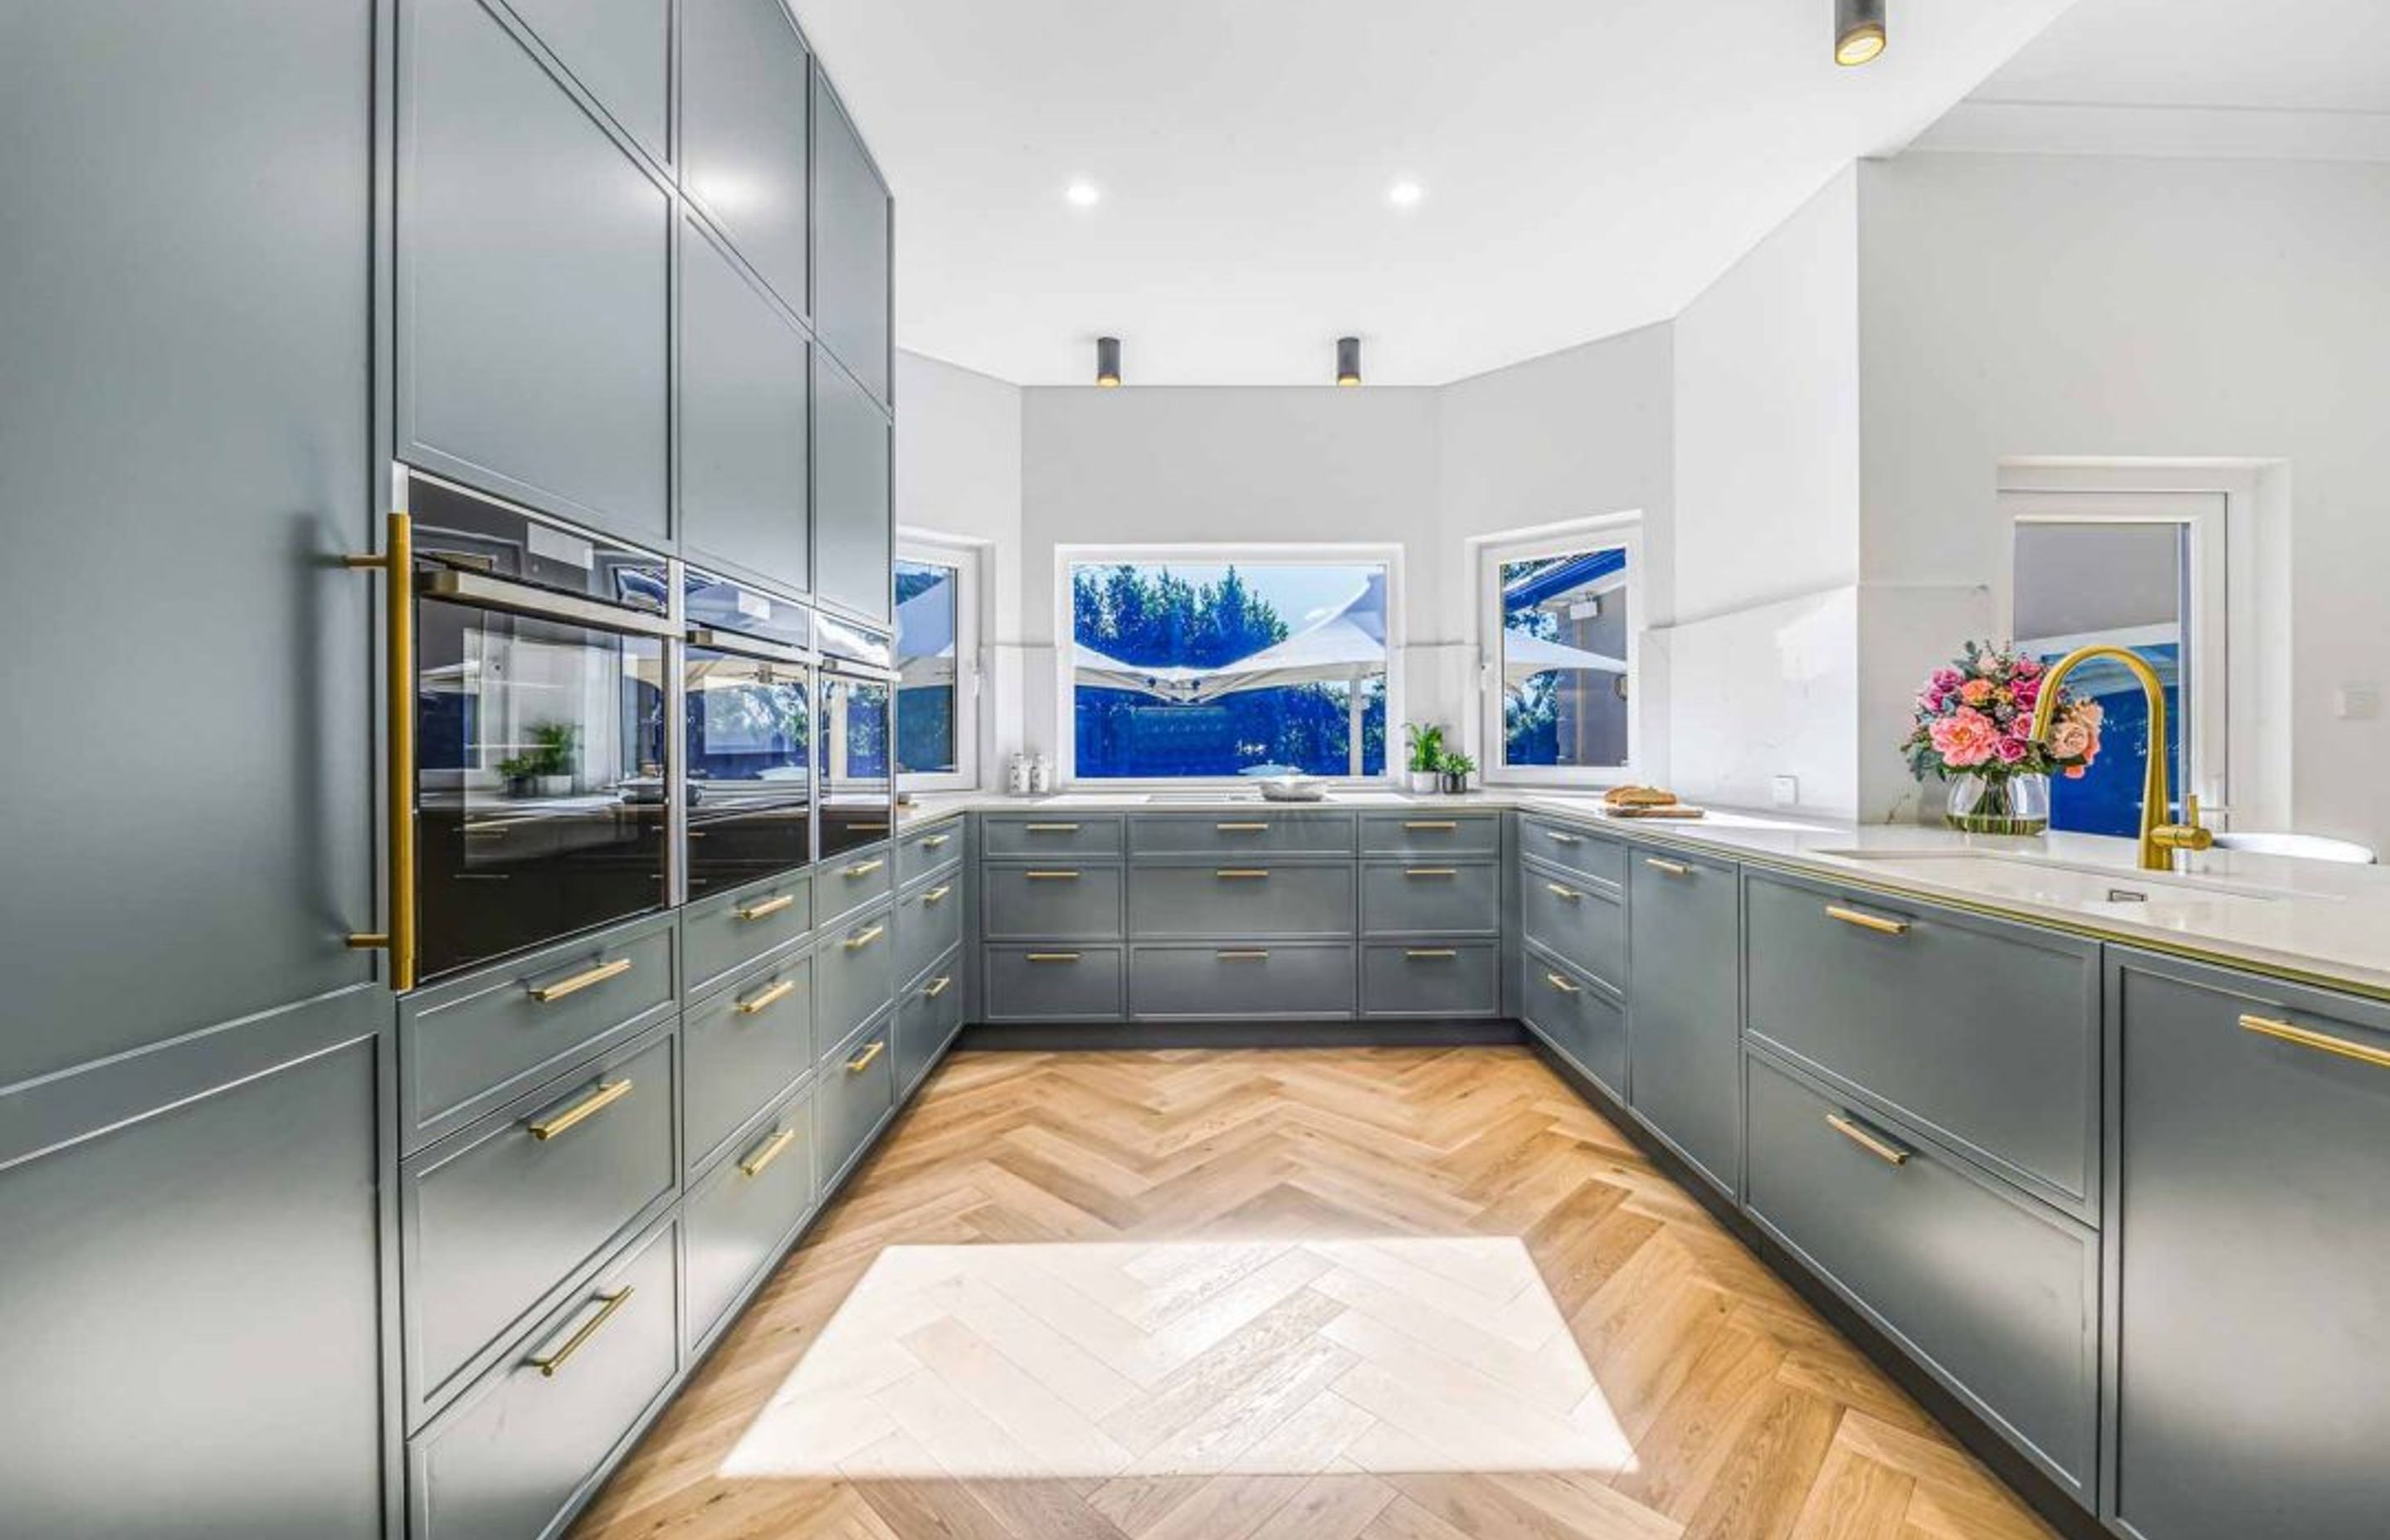 modern-luxury-kitchen-design-premier-kitchens-stone-benchtop-renovations-neff-appliances-2-gold-handles-grey-paint-1084x721.jpg